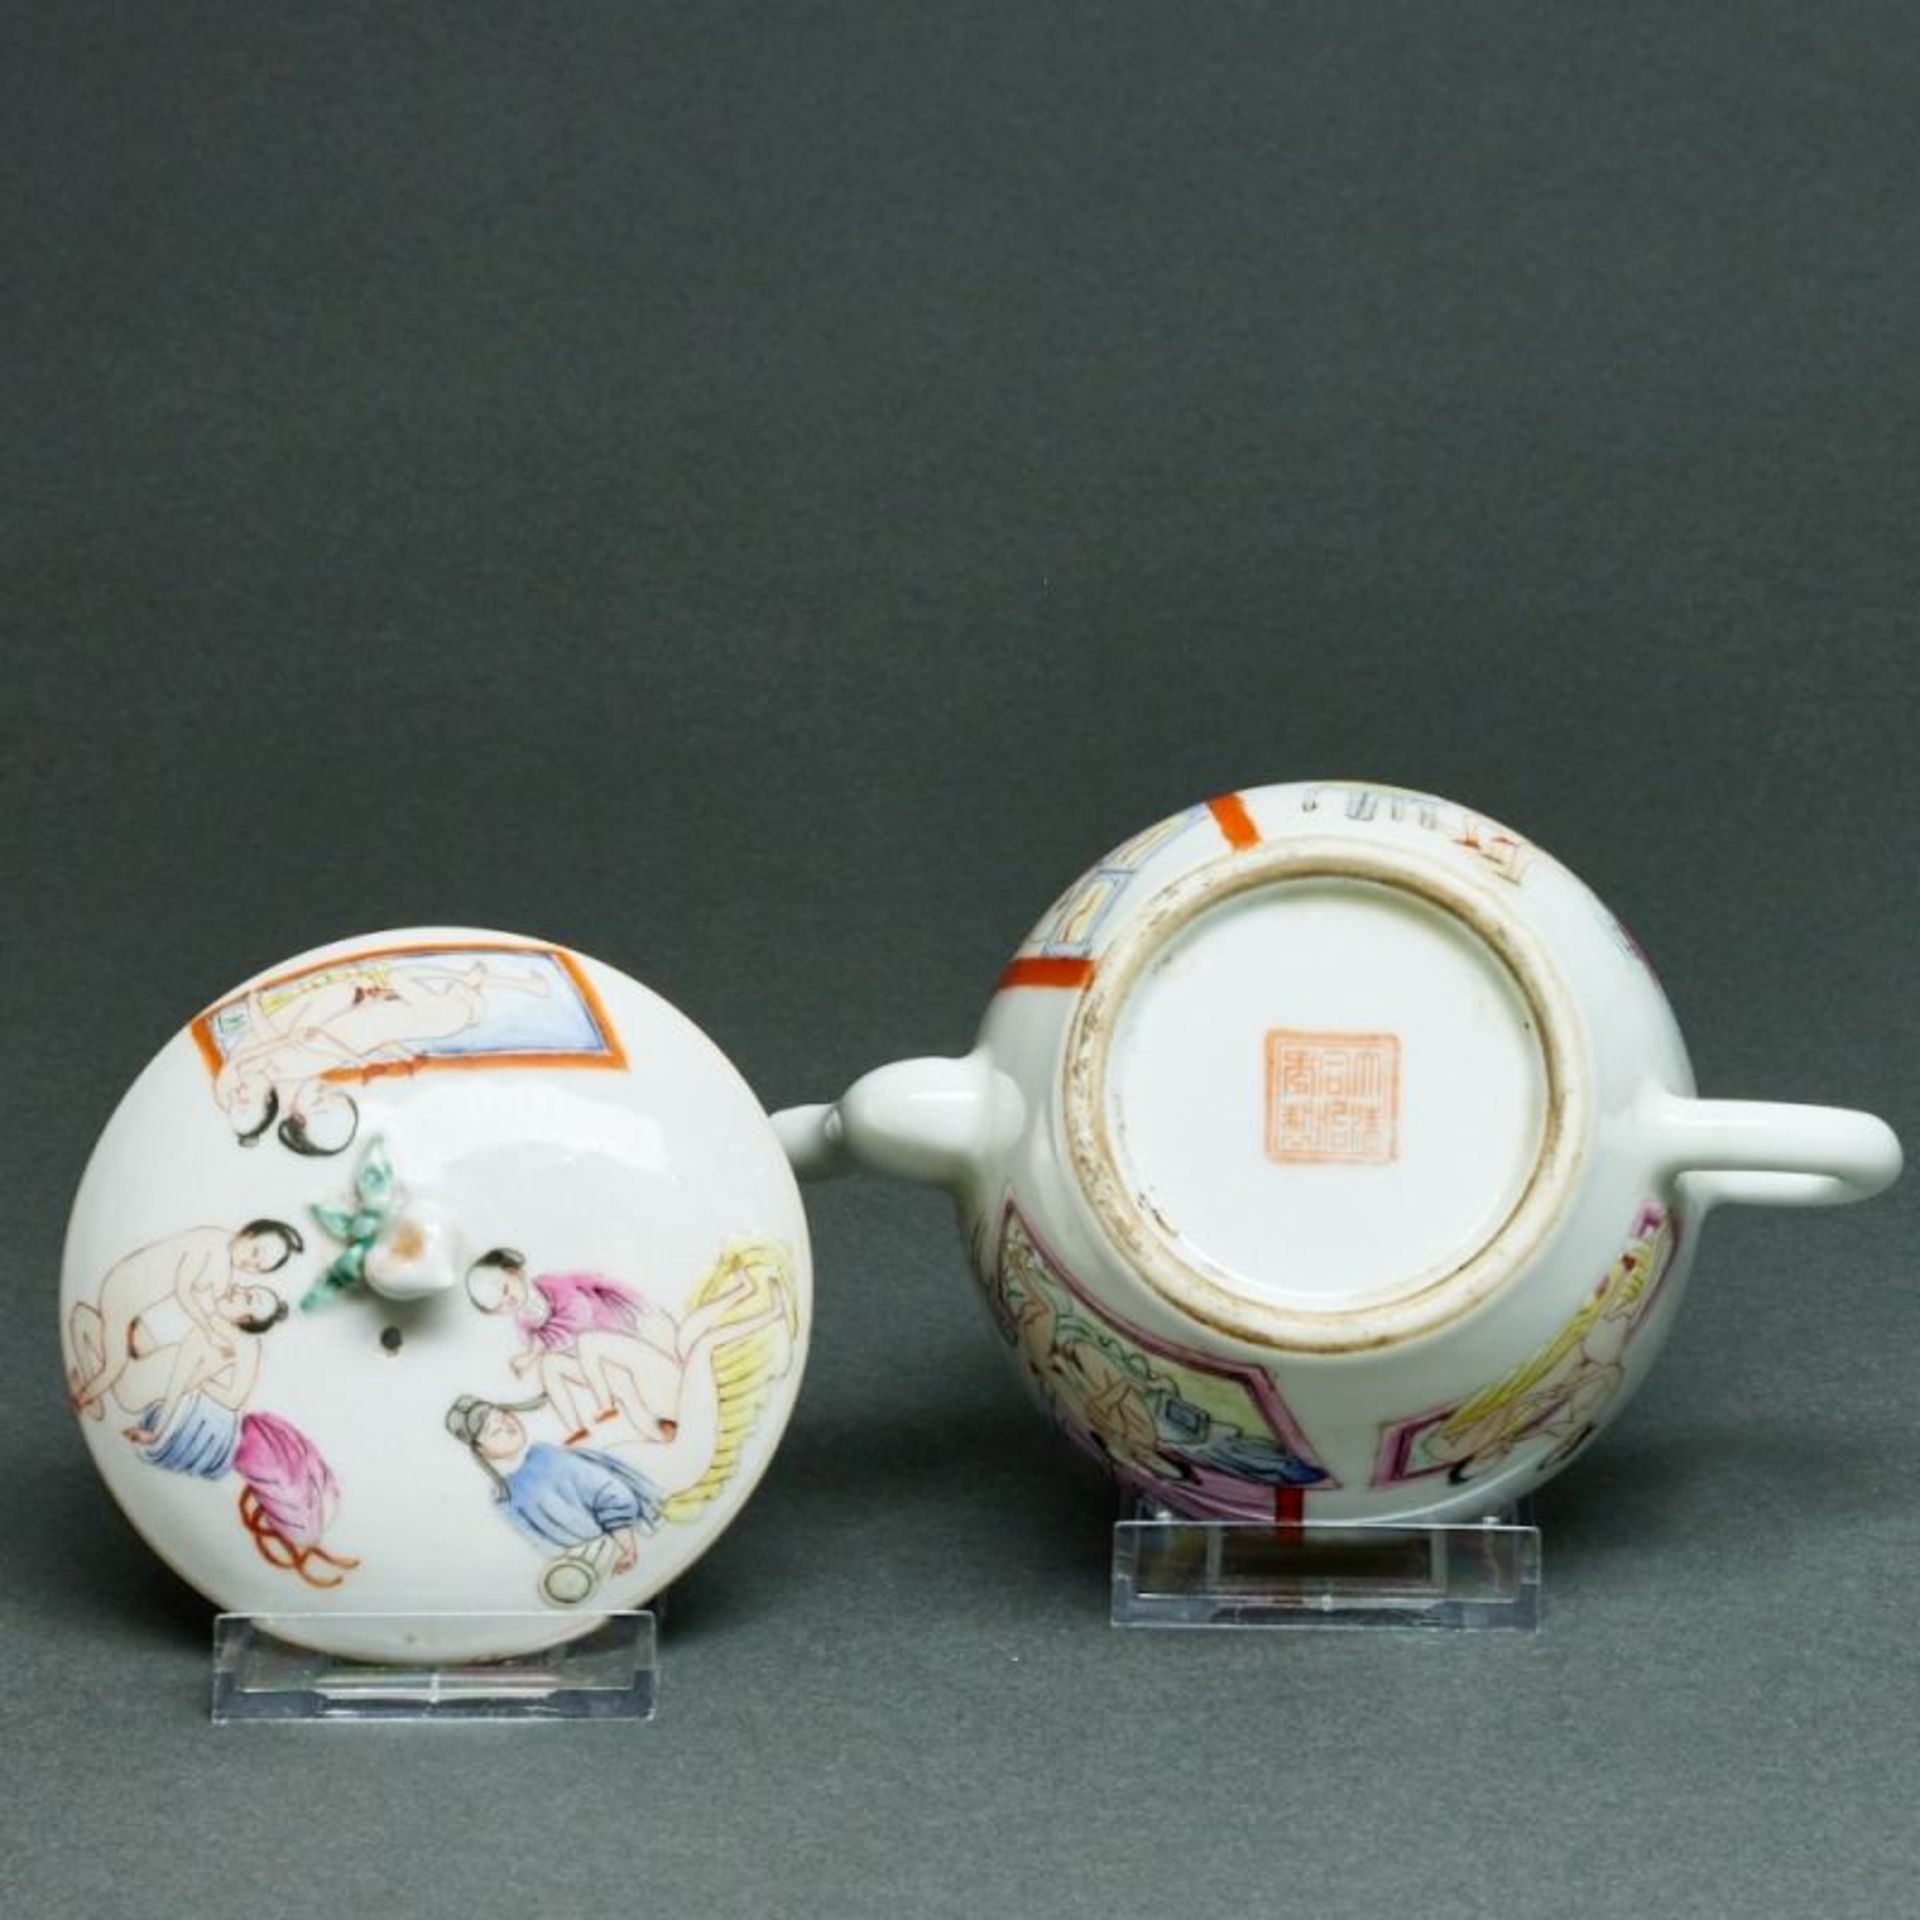 Teekanne mit Erotika Motiven, China, wohl 20. Jahrhundert - Image 3 of 4